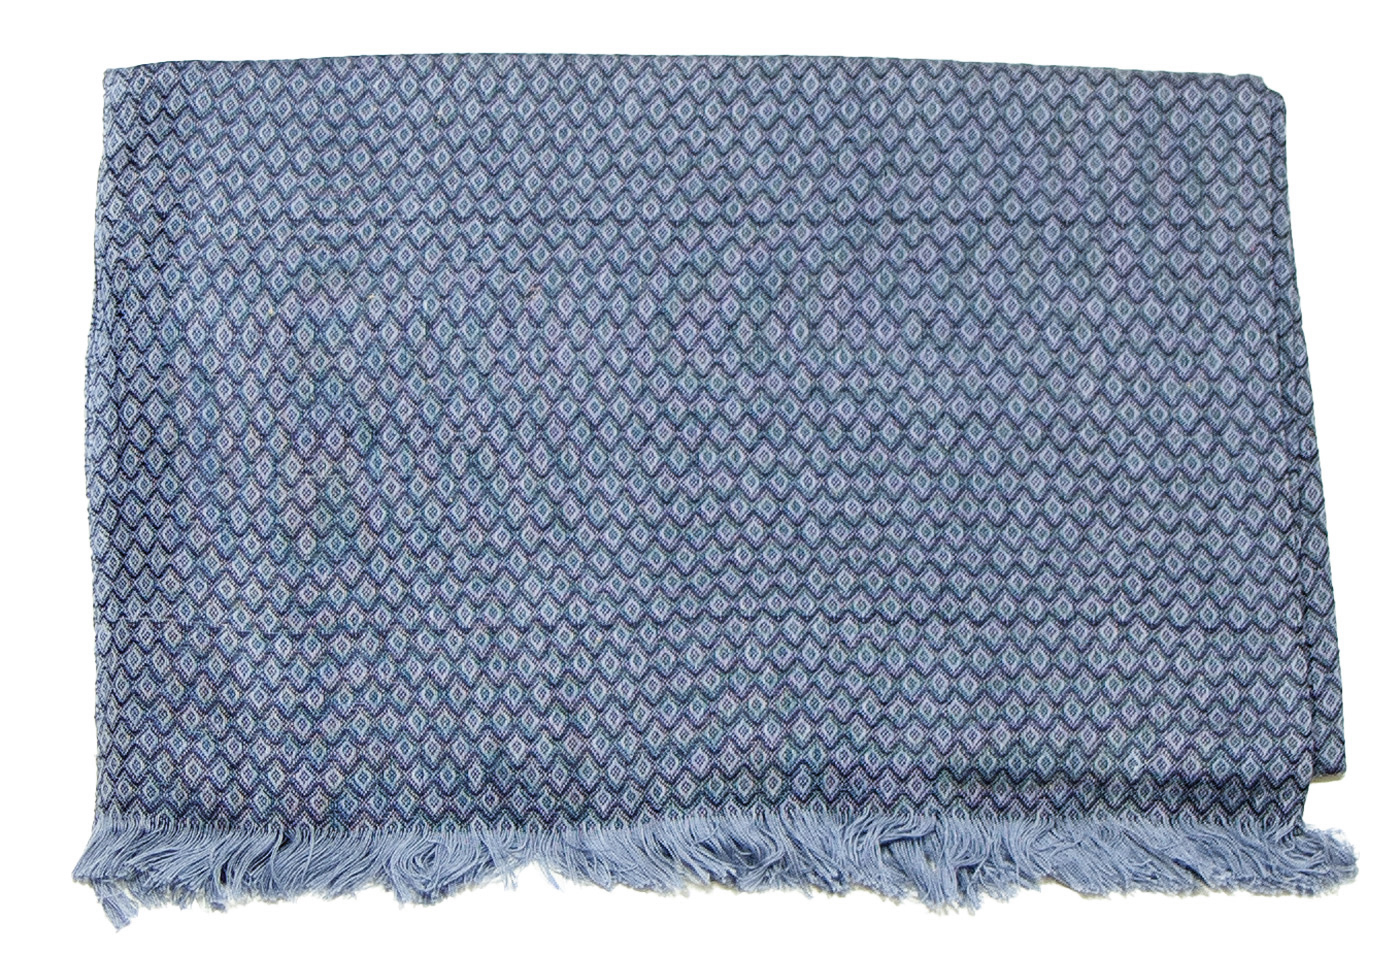 foulard homme bleu motifs losanges